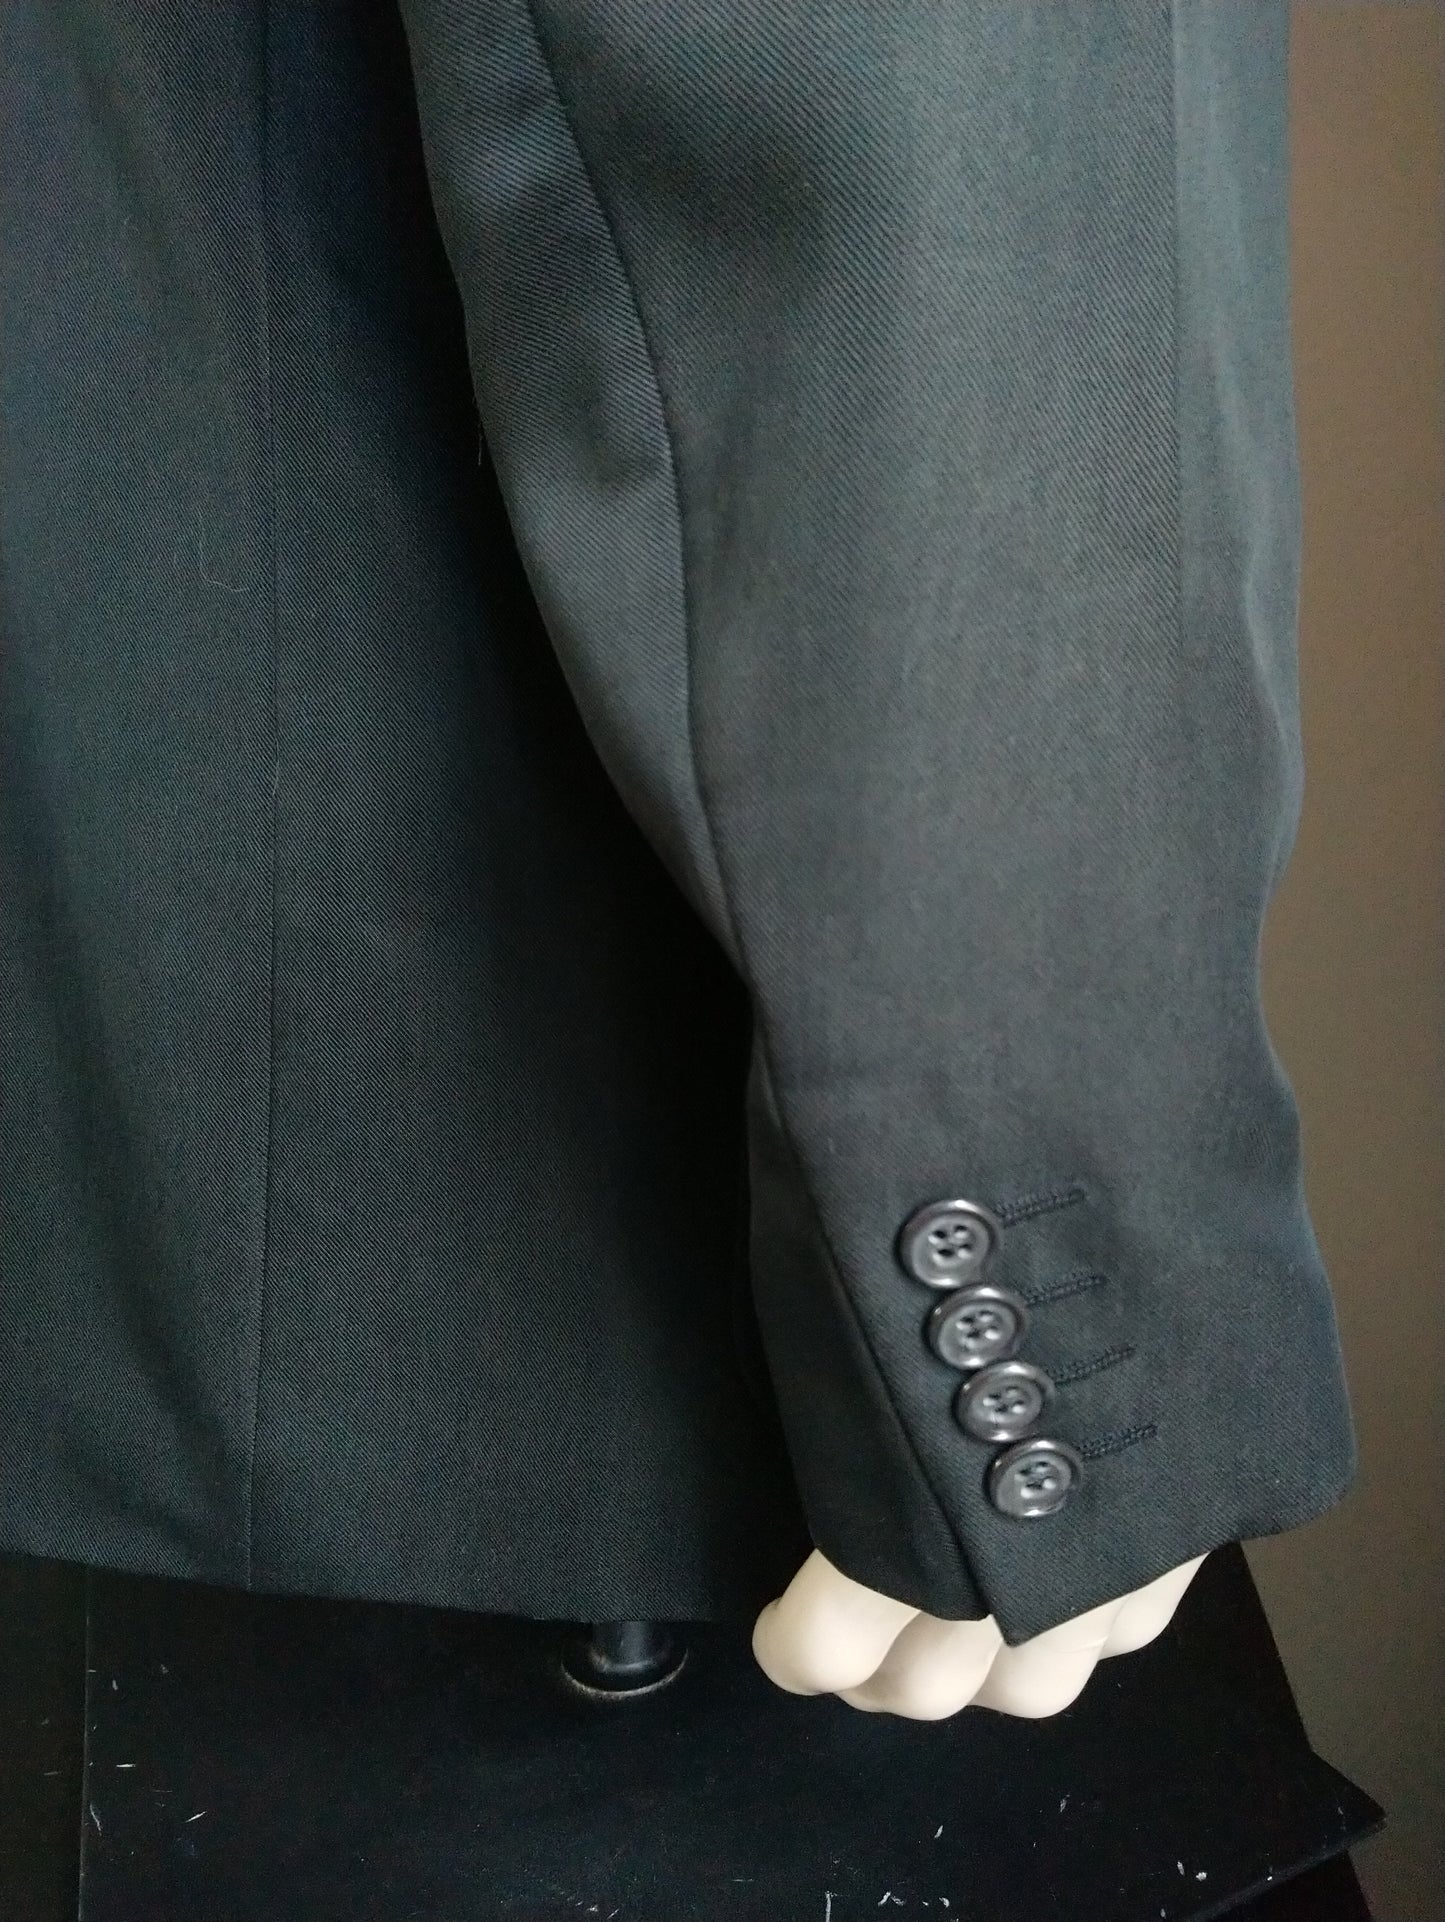 Foreground jacket / jacket. Black colored. Size 54 / L.